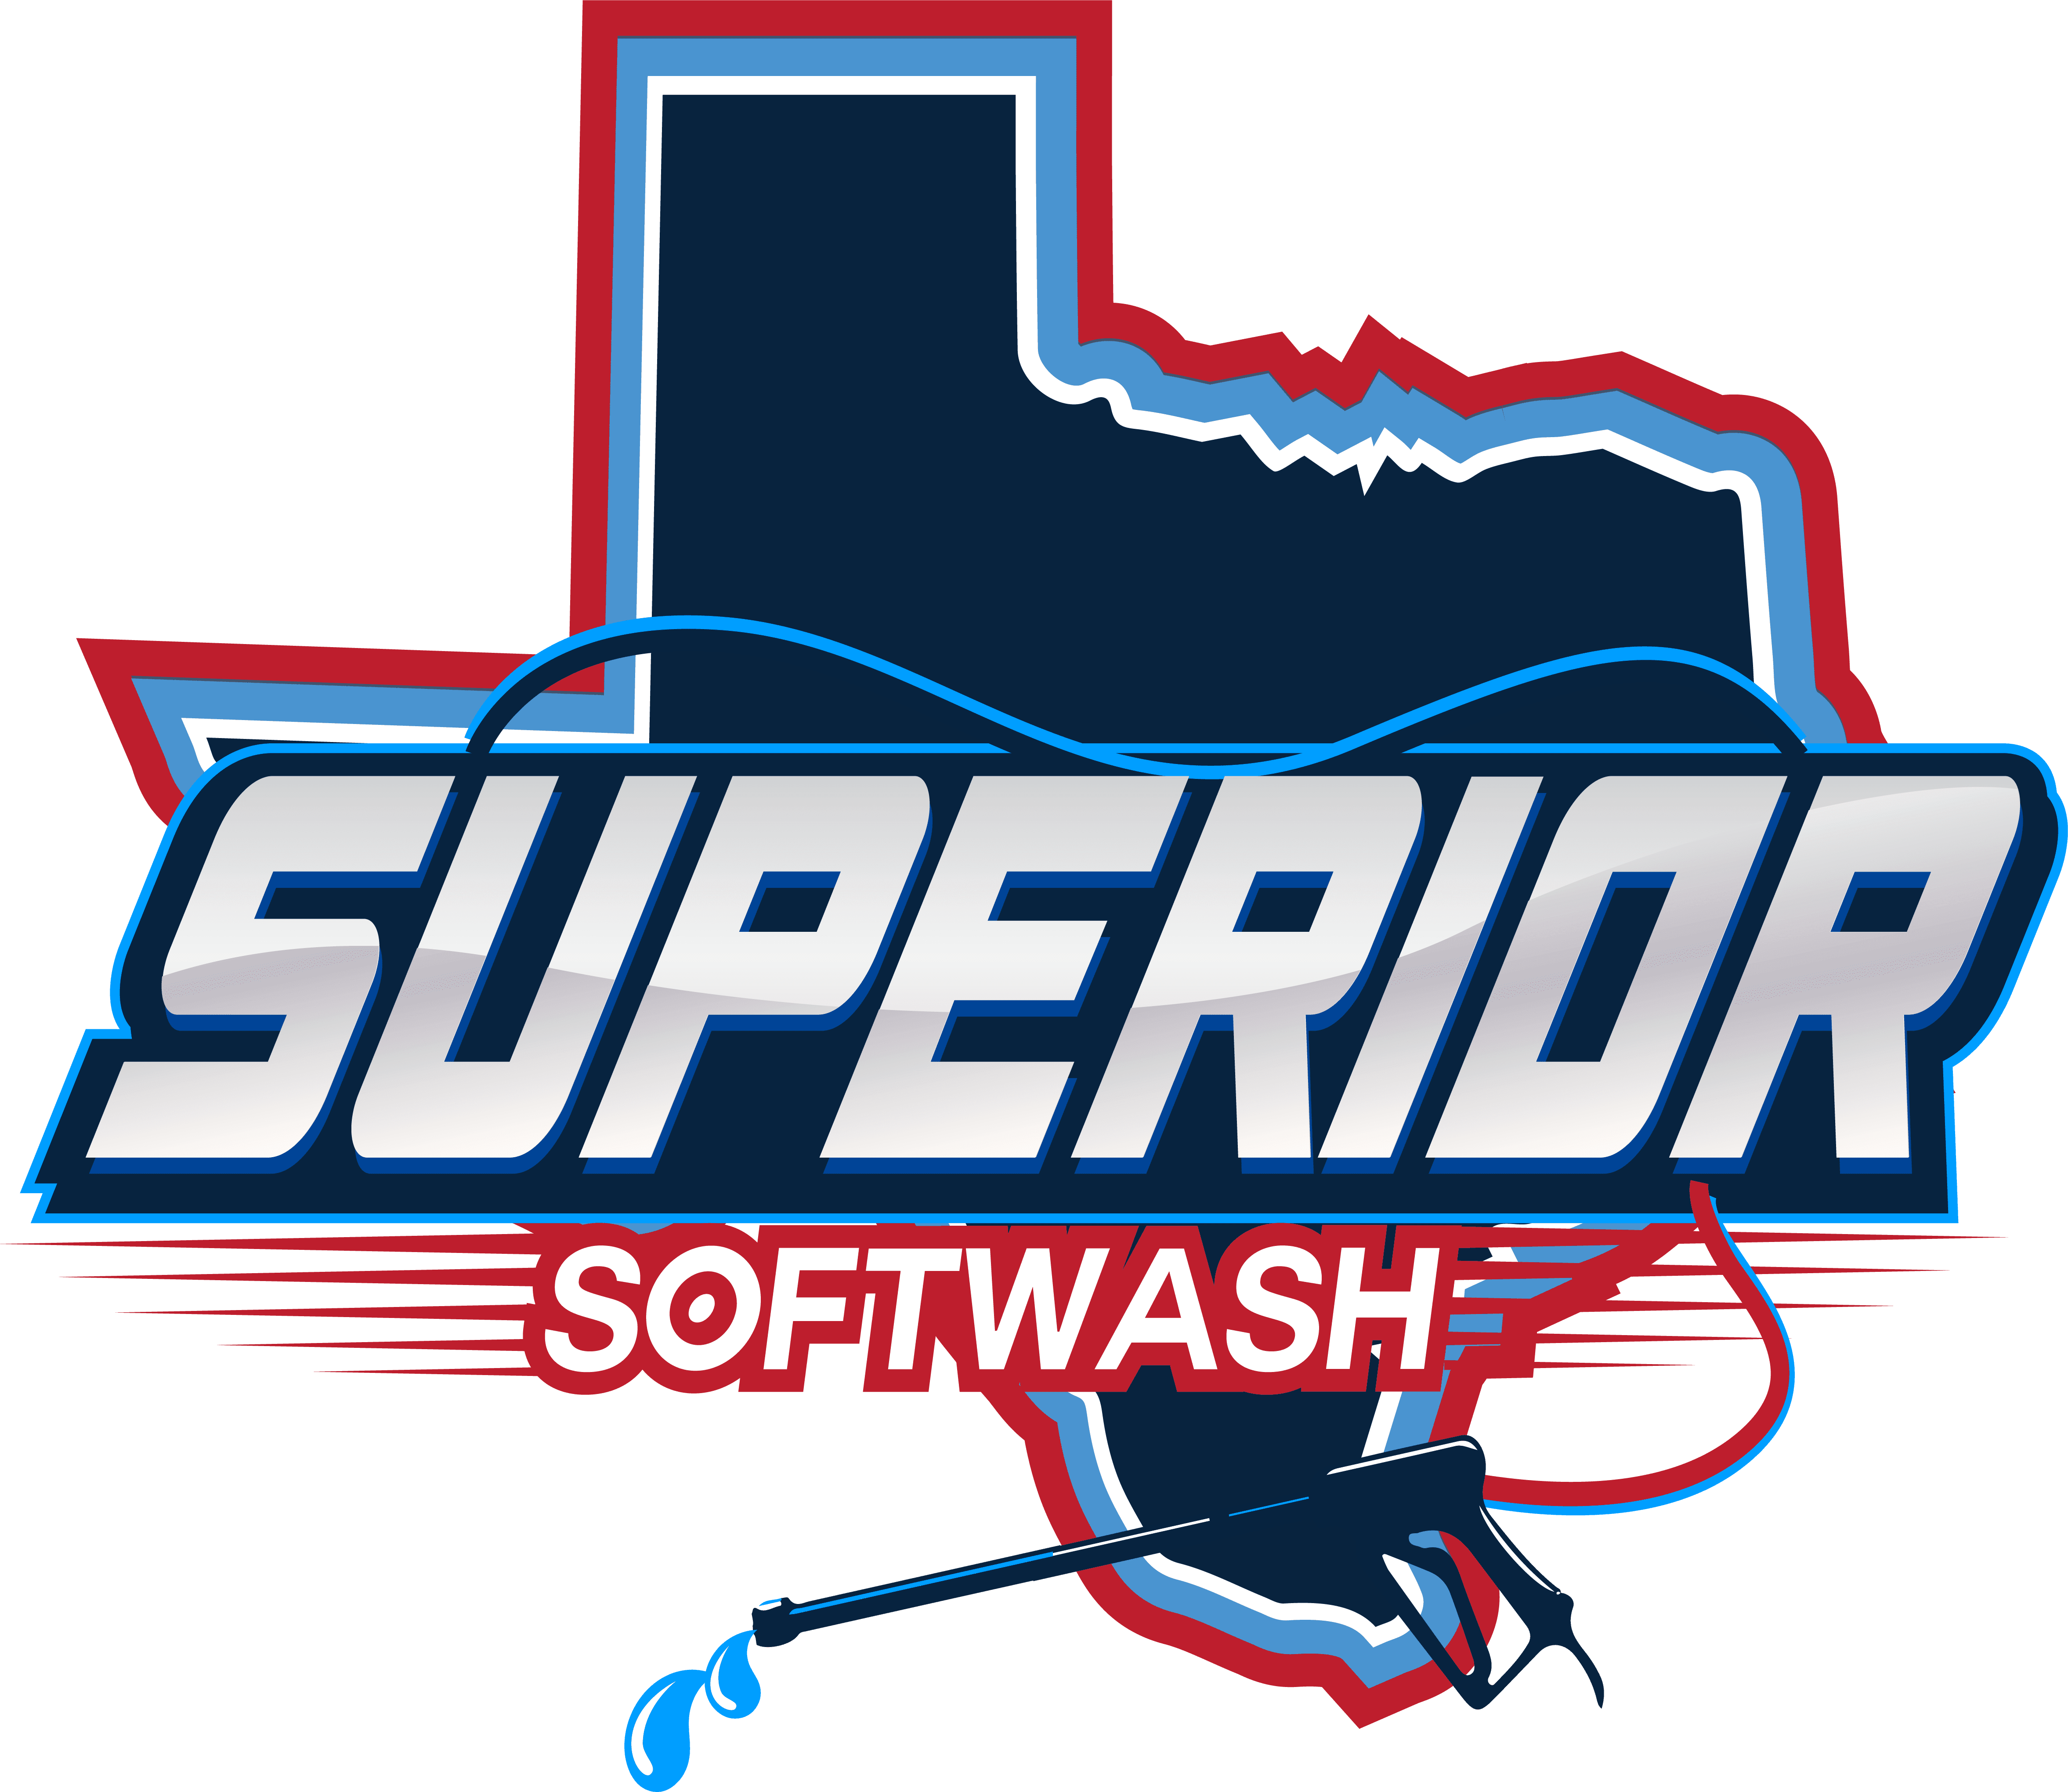 Texas Superior Softwash